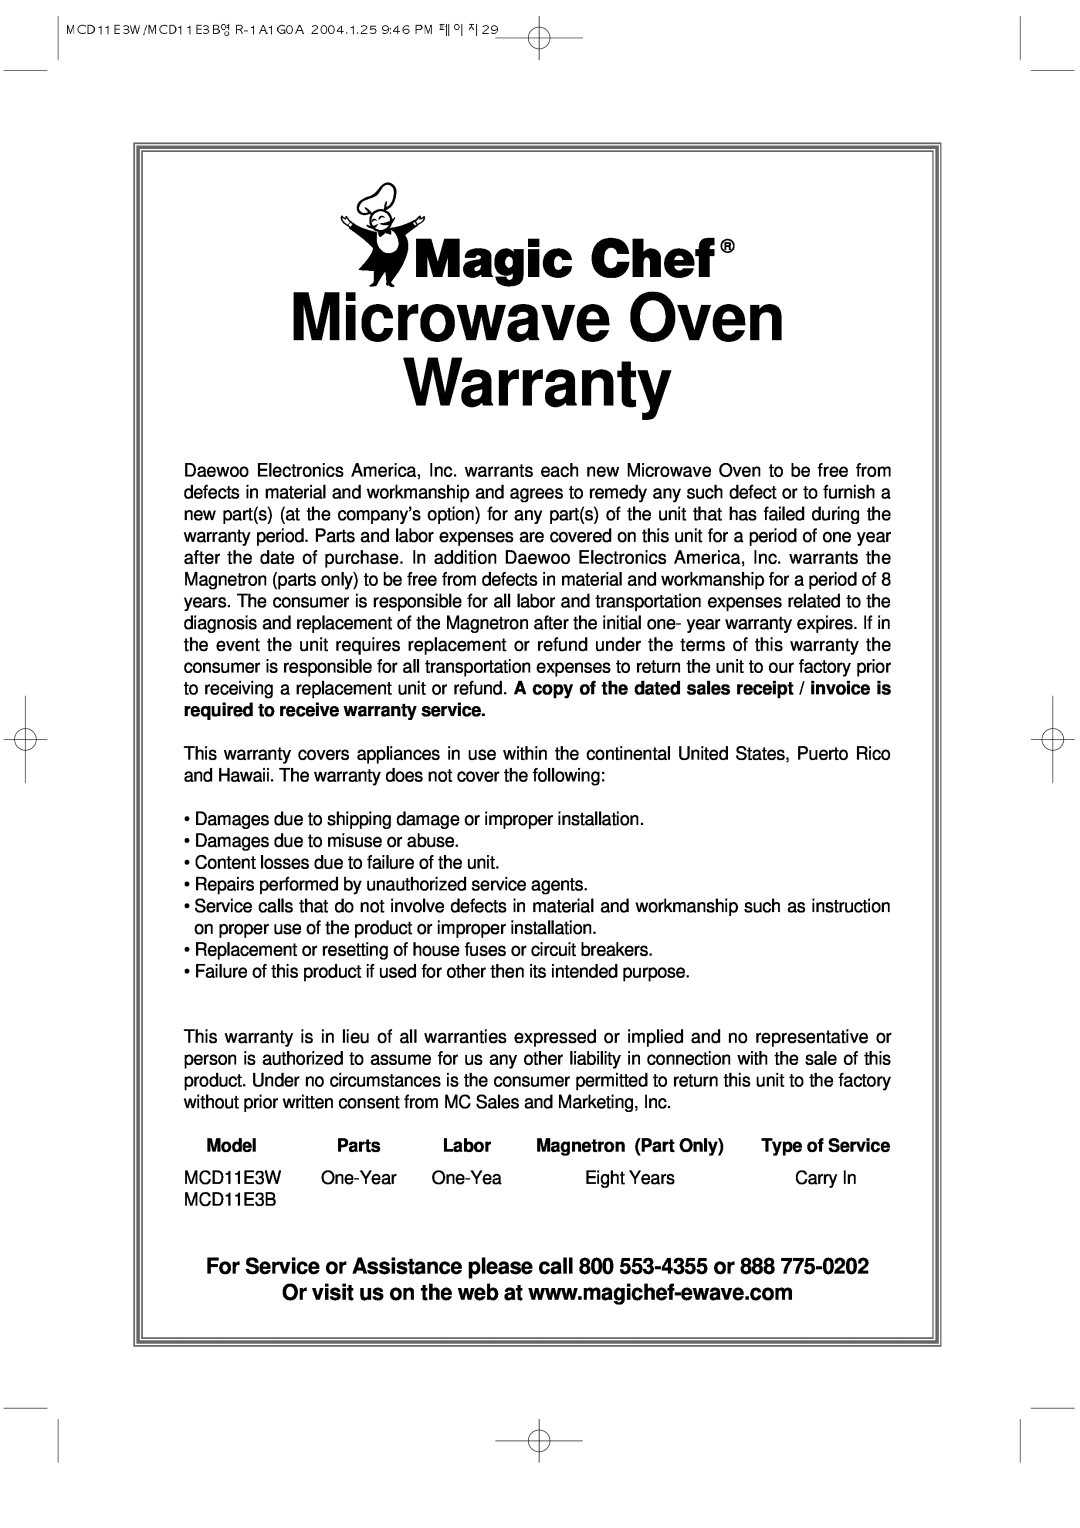 Magic Chef MCD11E3B instruction manual Model, Parts, Microwave Oven Warranty 